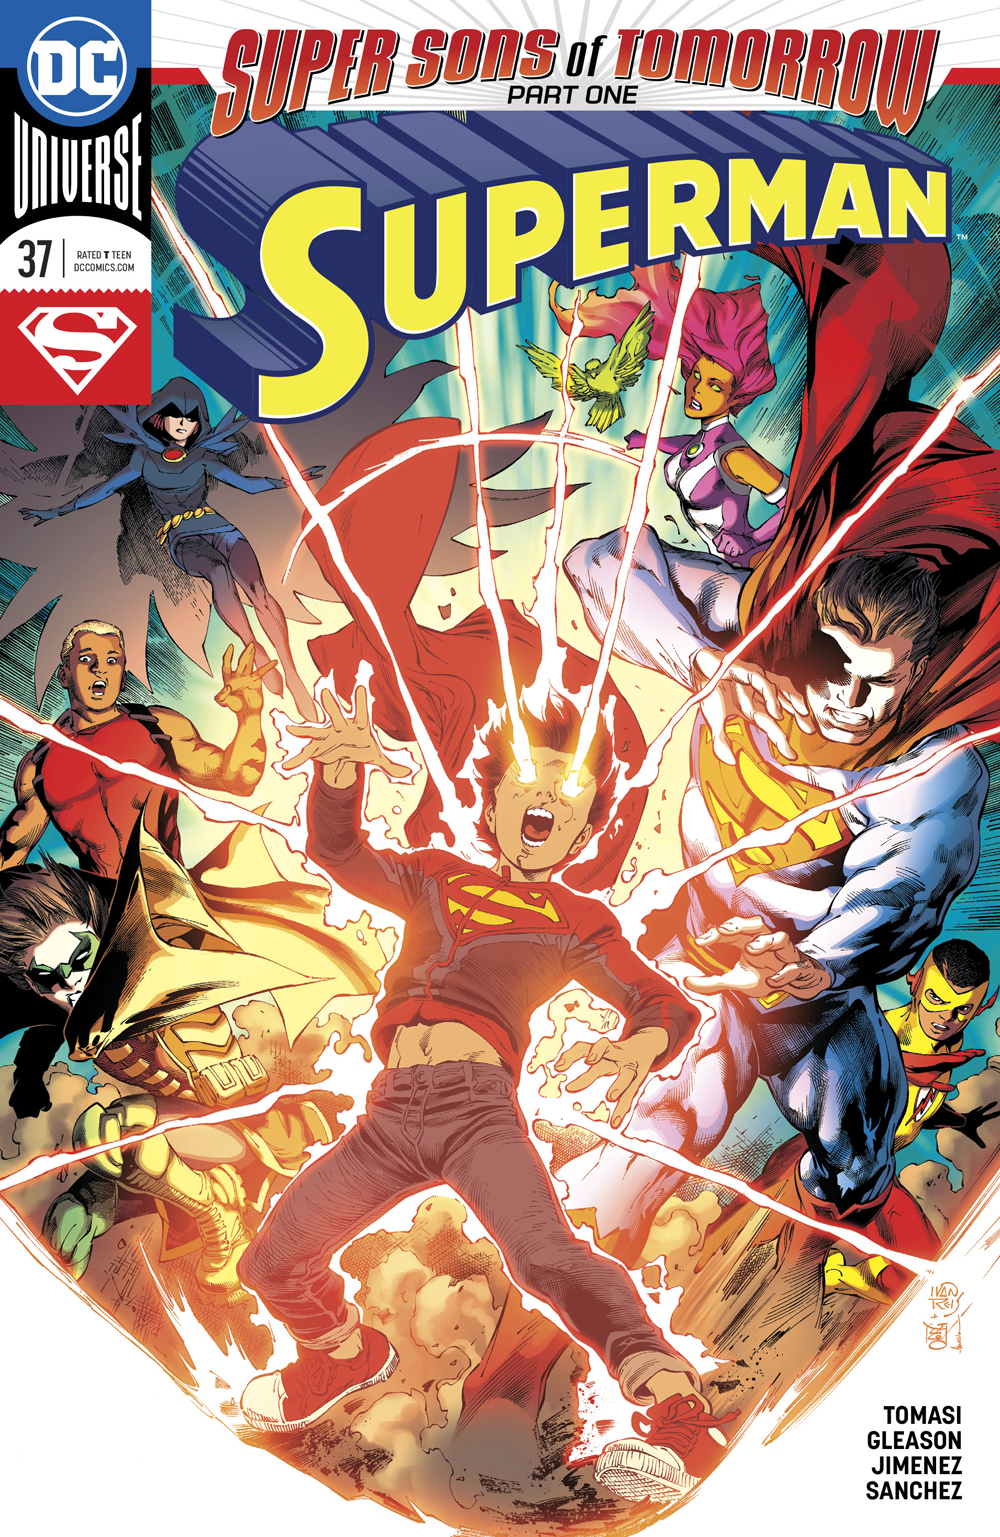 SUPERMAN #37 (SONS OF TOMORROW)